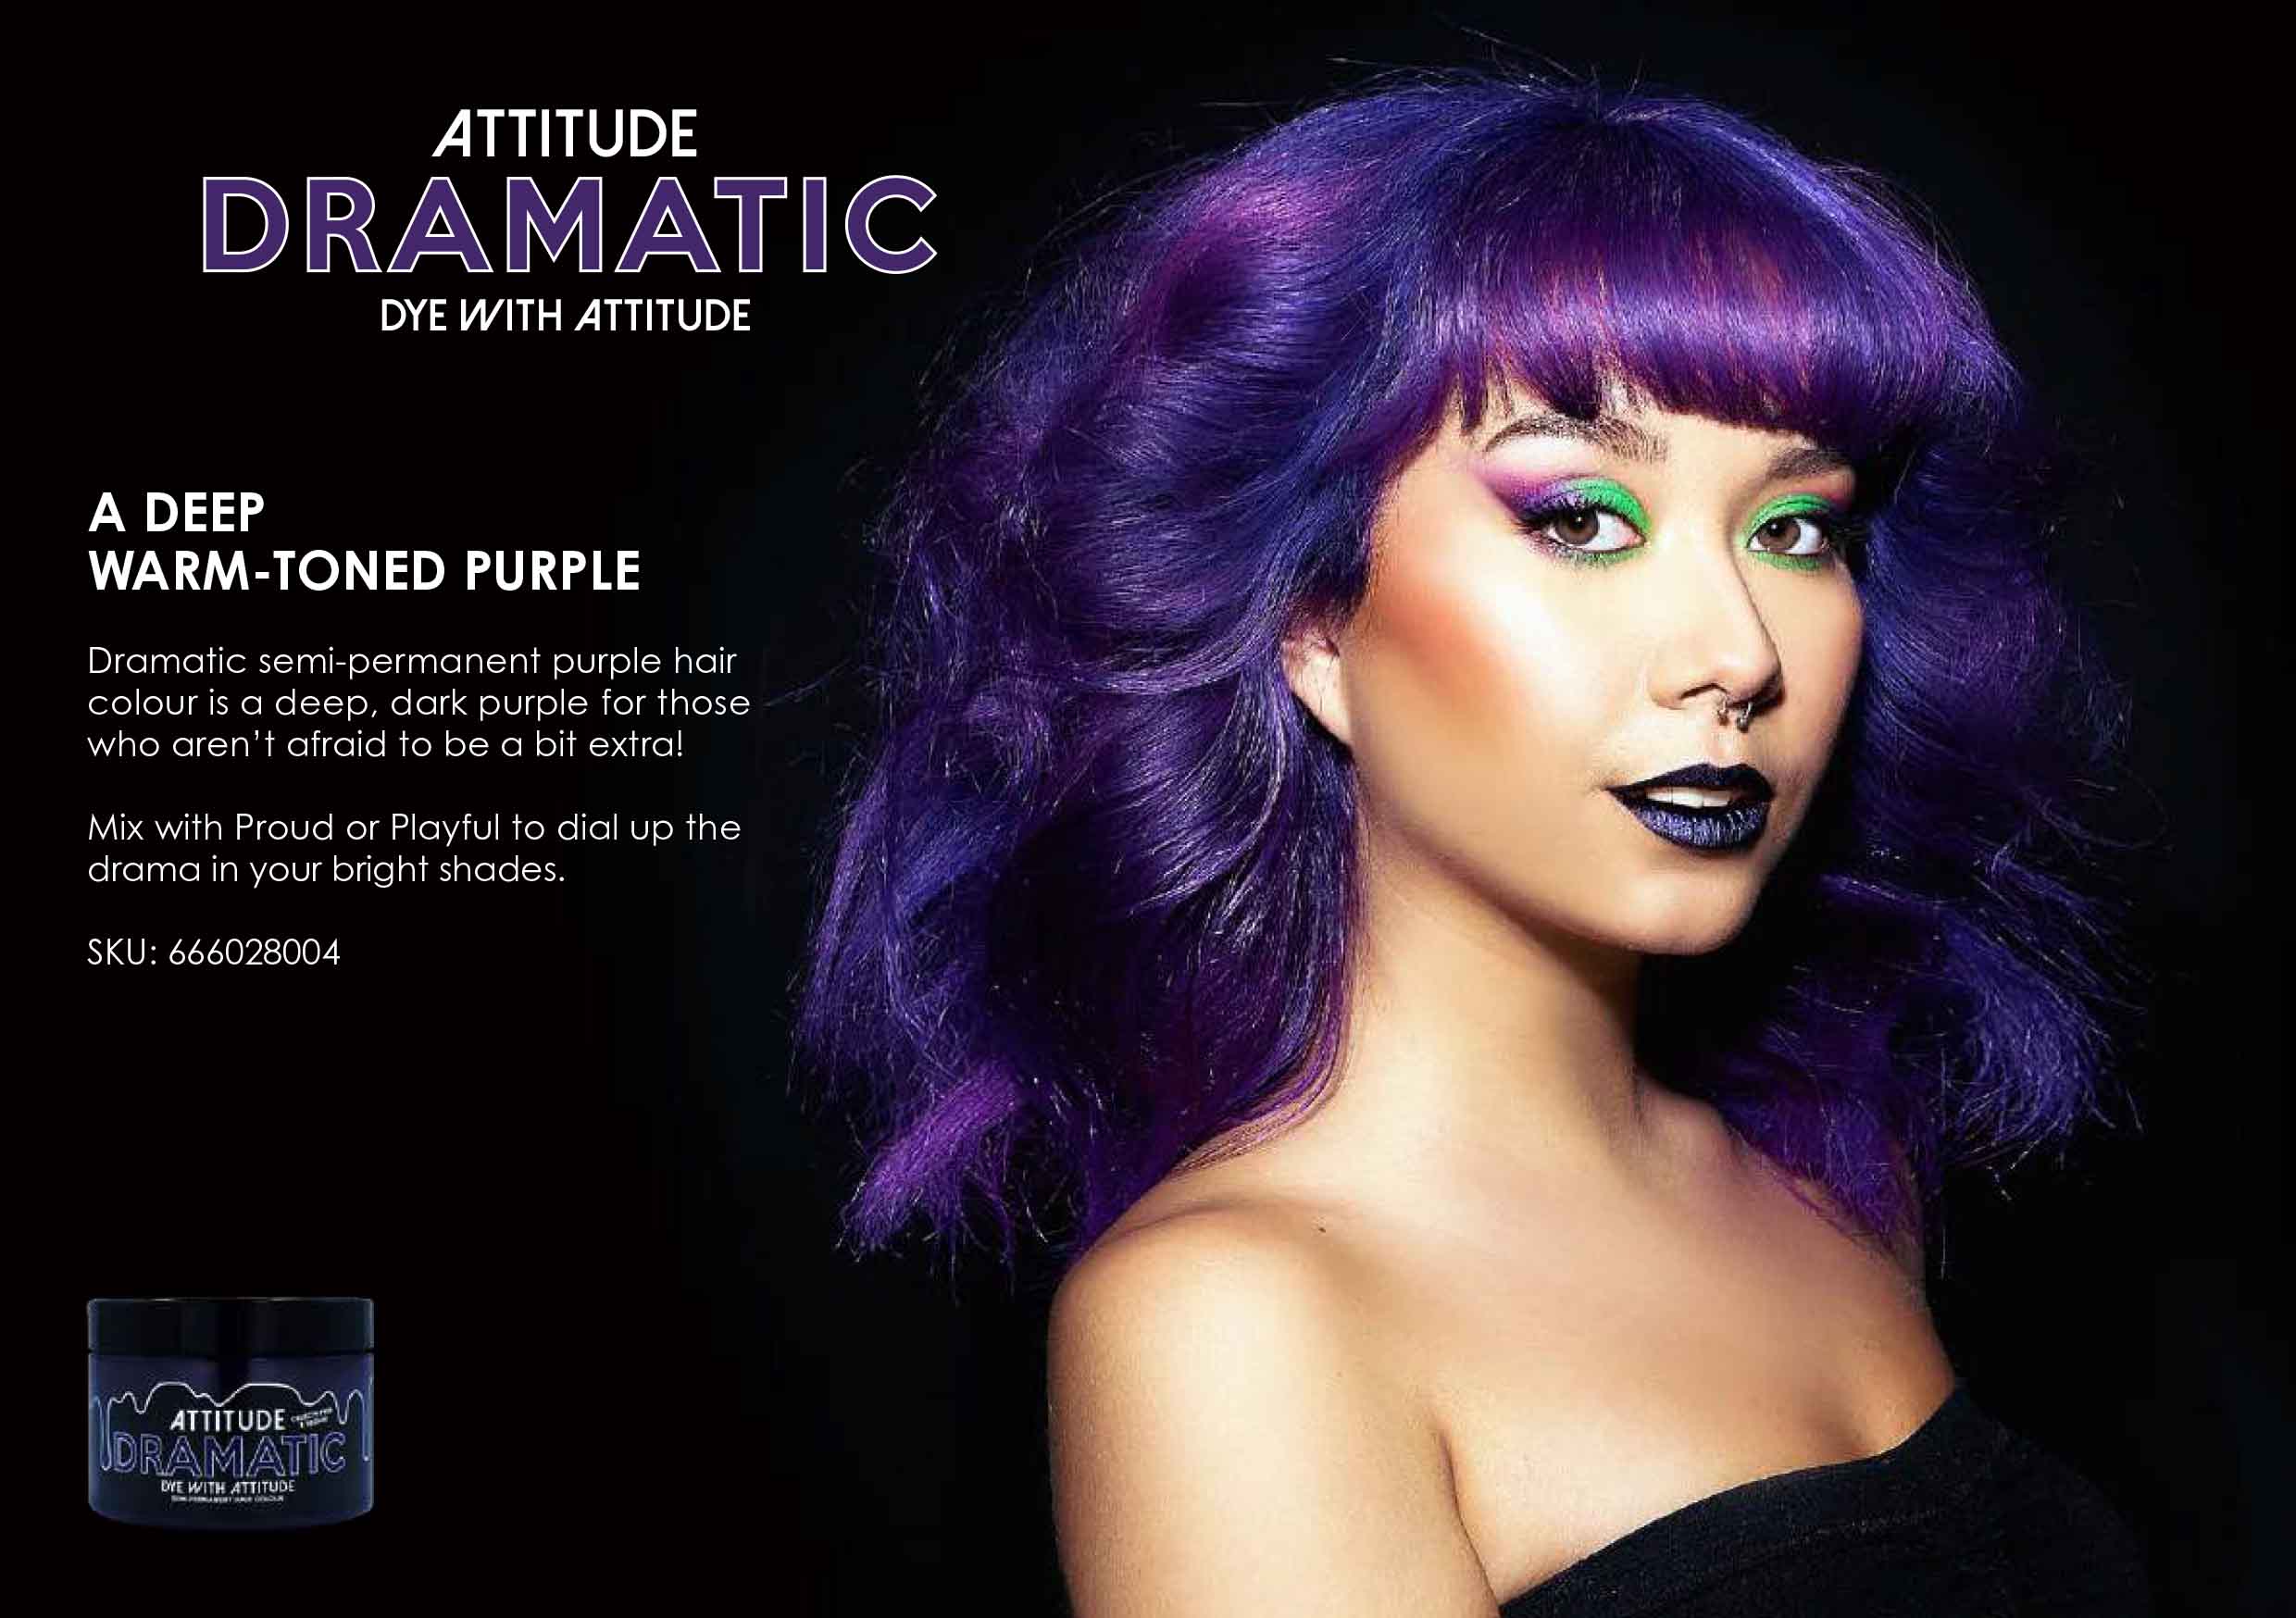 Attitude Hair Dye Attitude Hair Dye - Dramatic Semi permanent hair dye